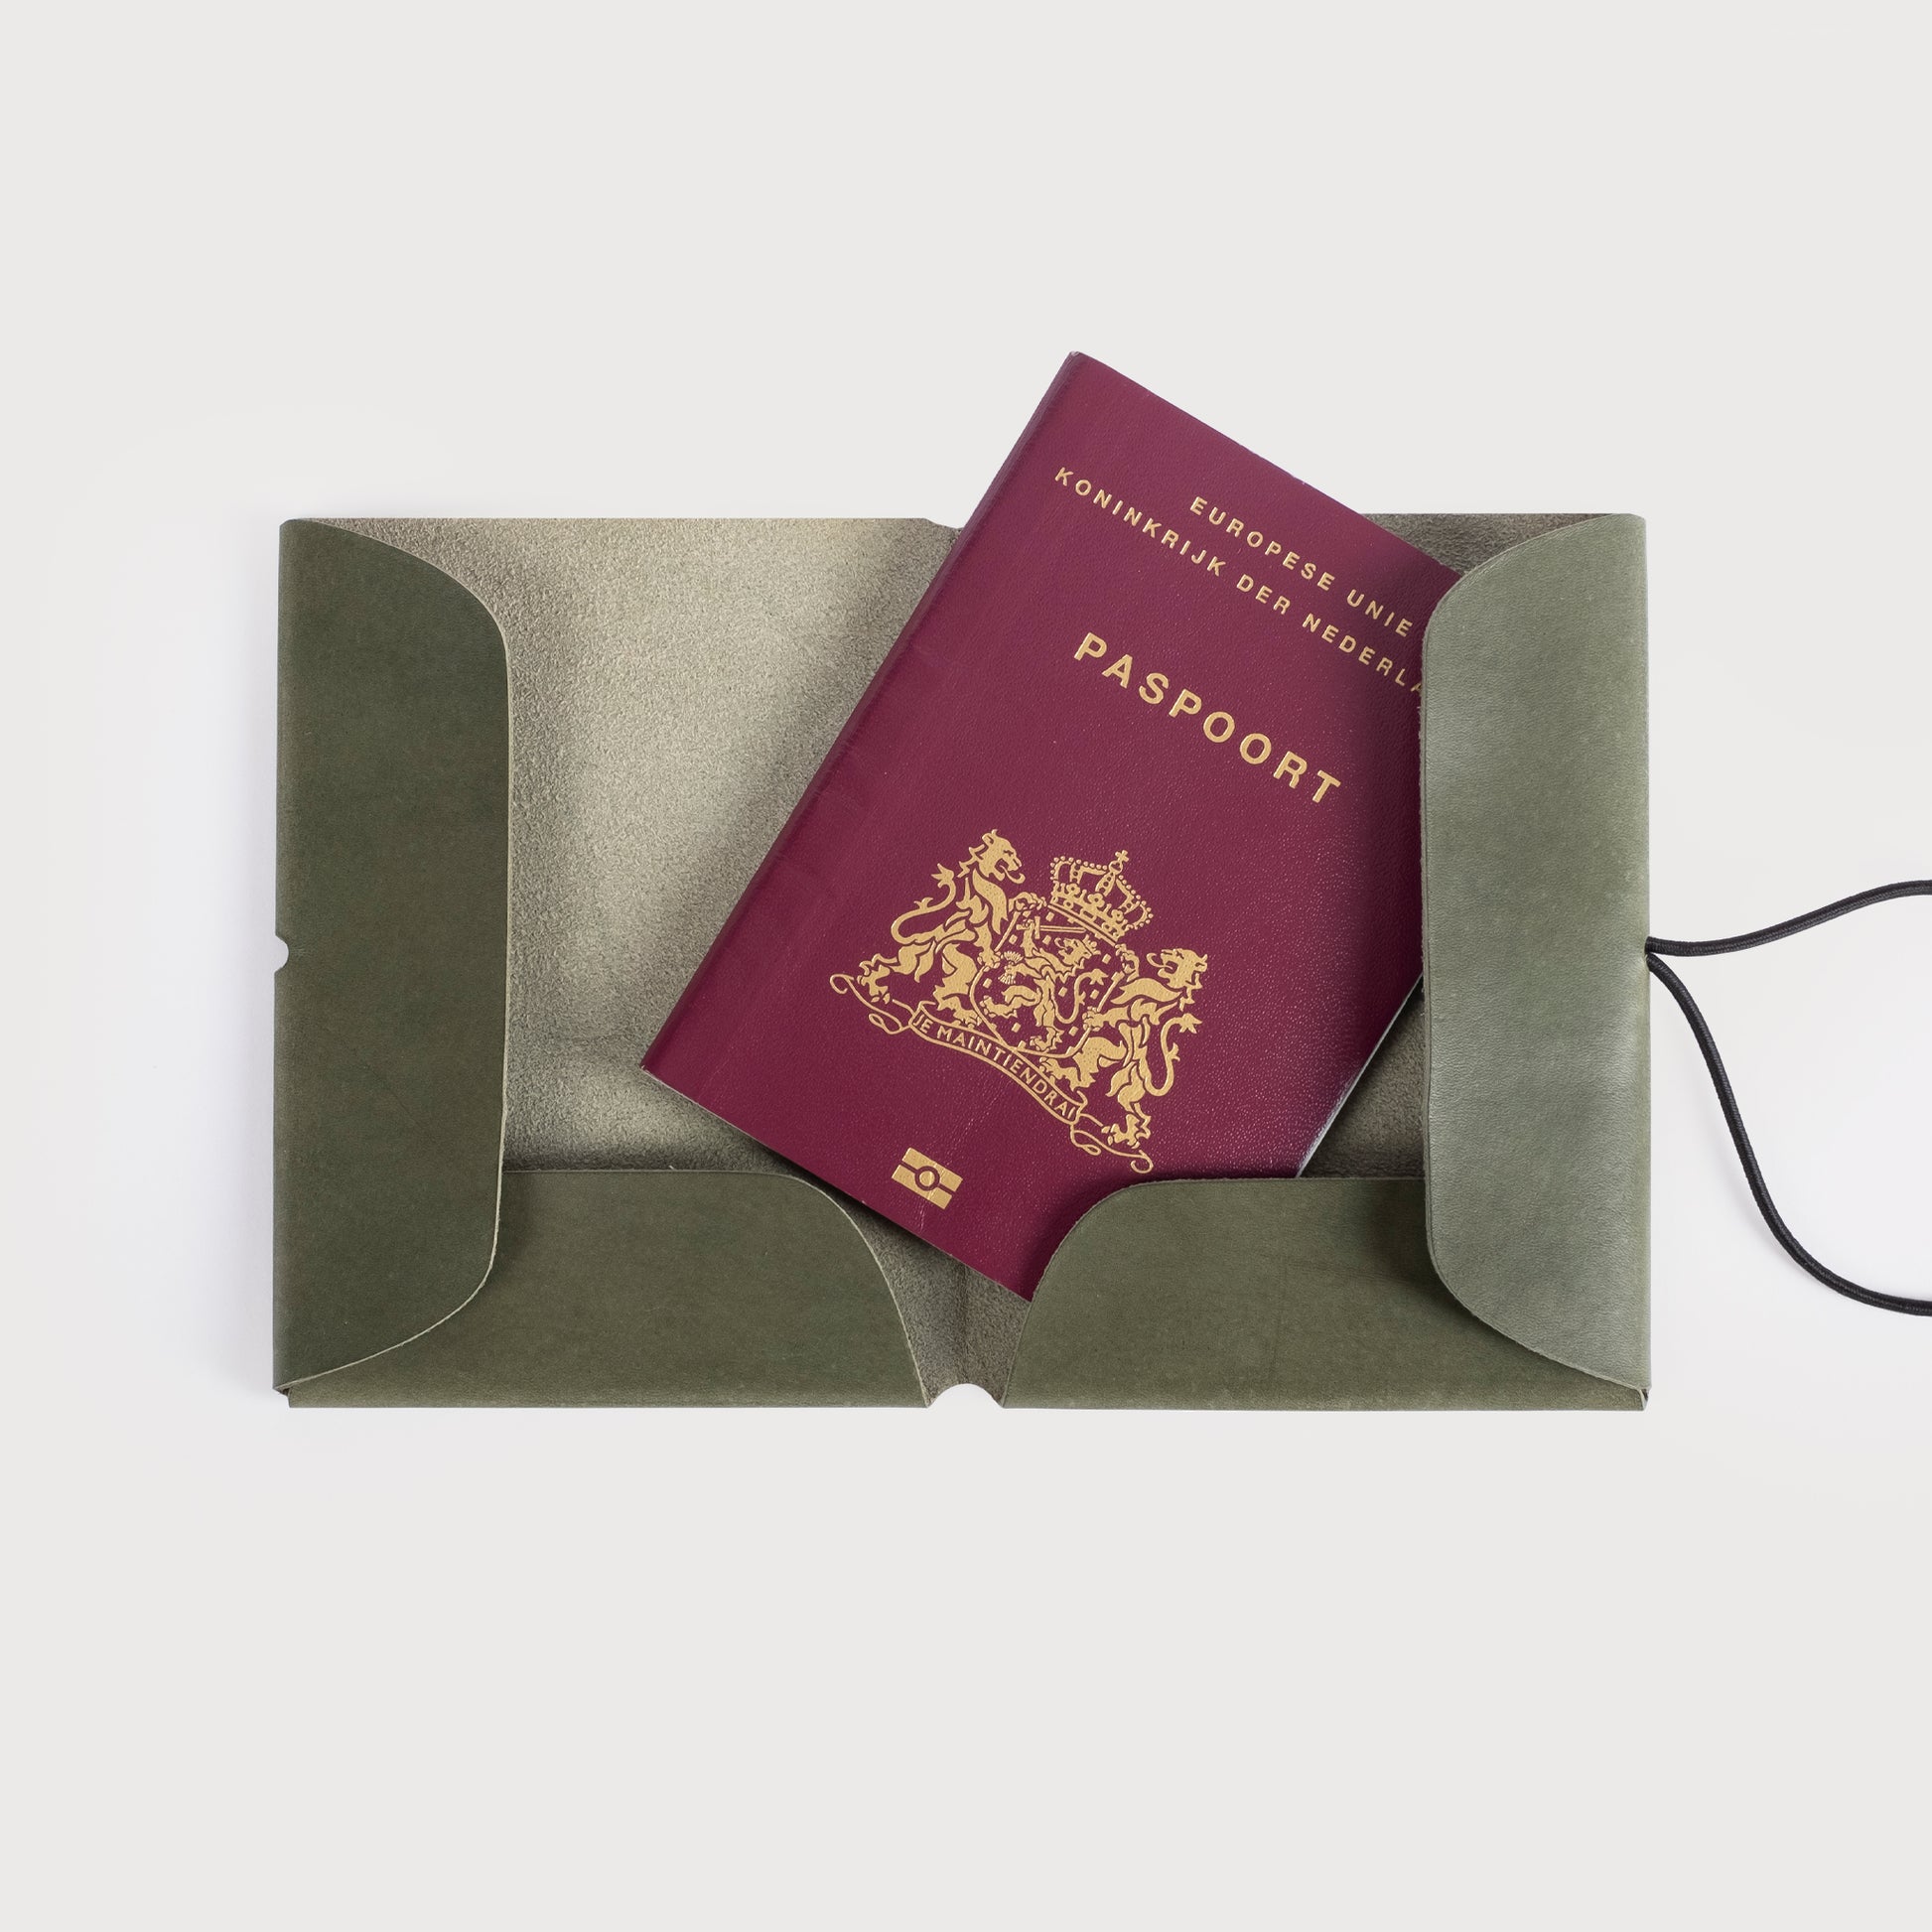 Nitmoi passport cover fits standard size passports